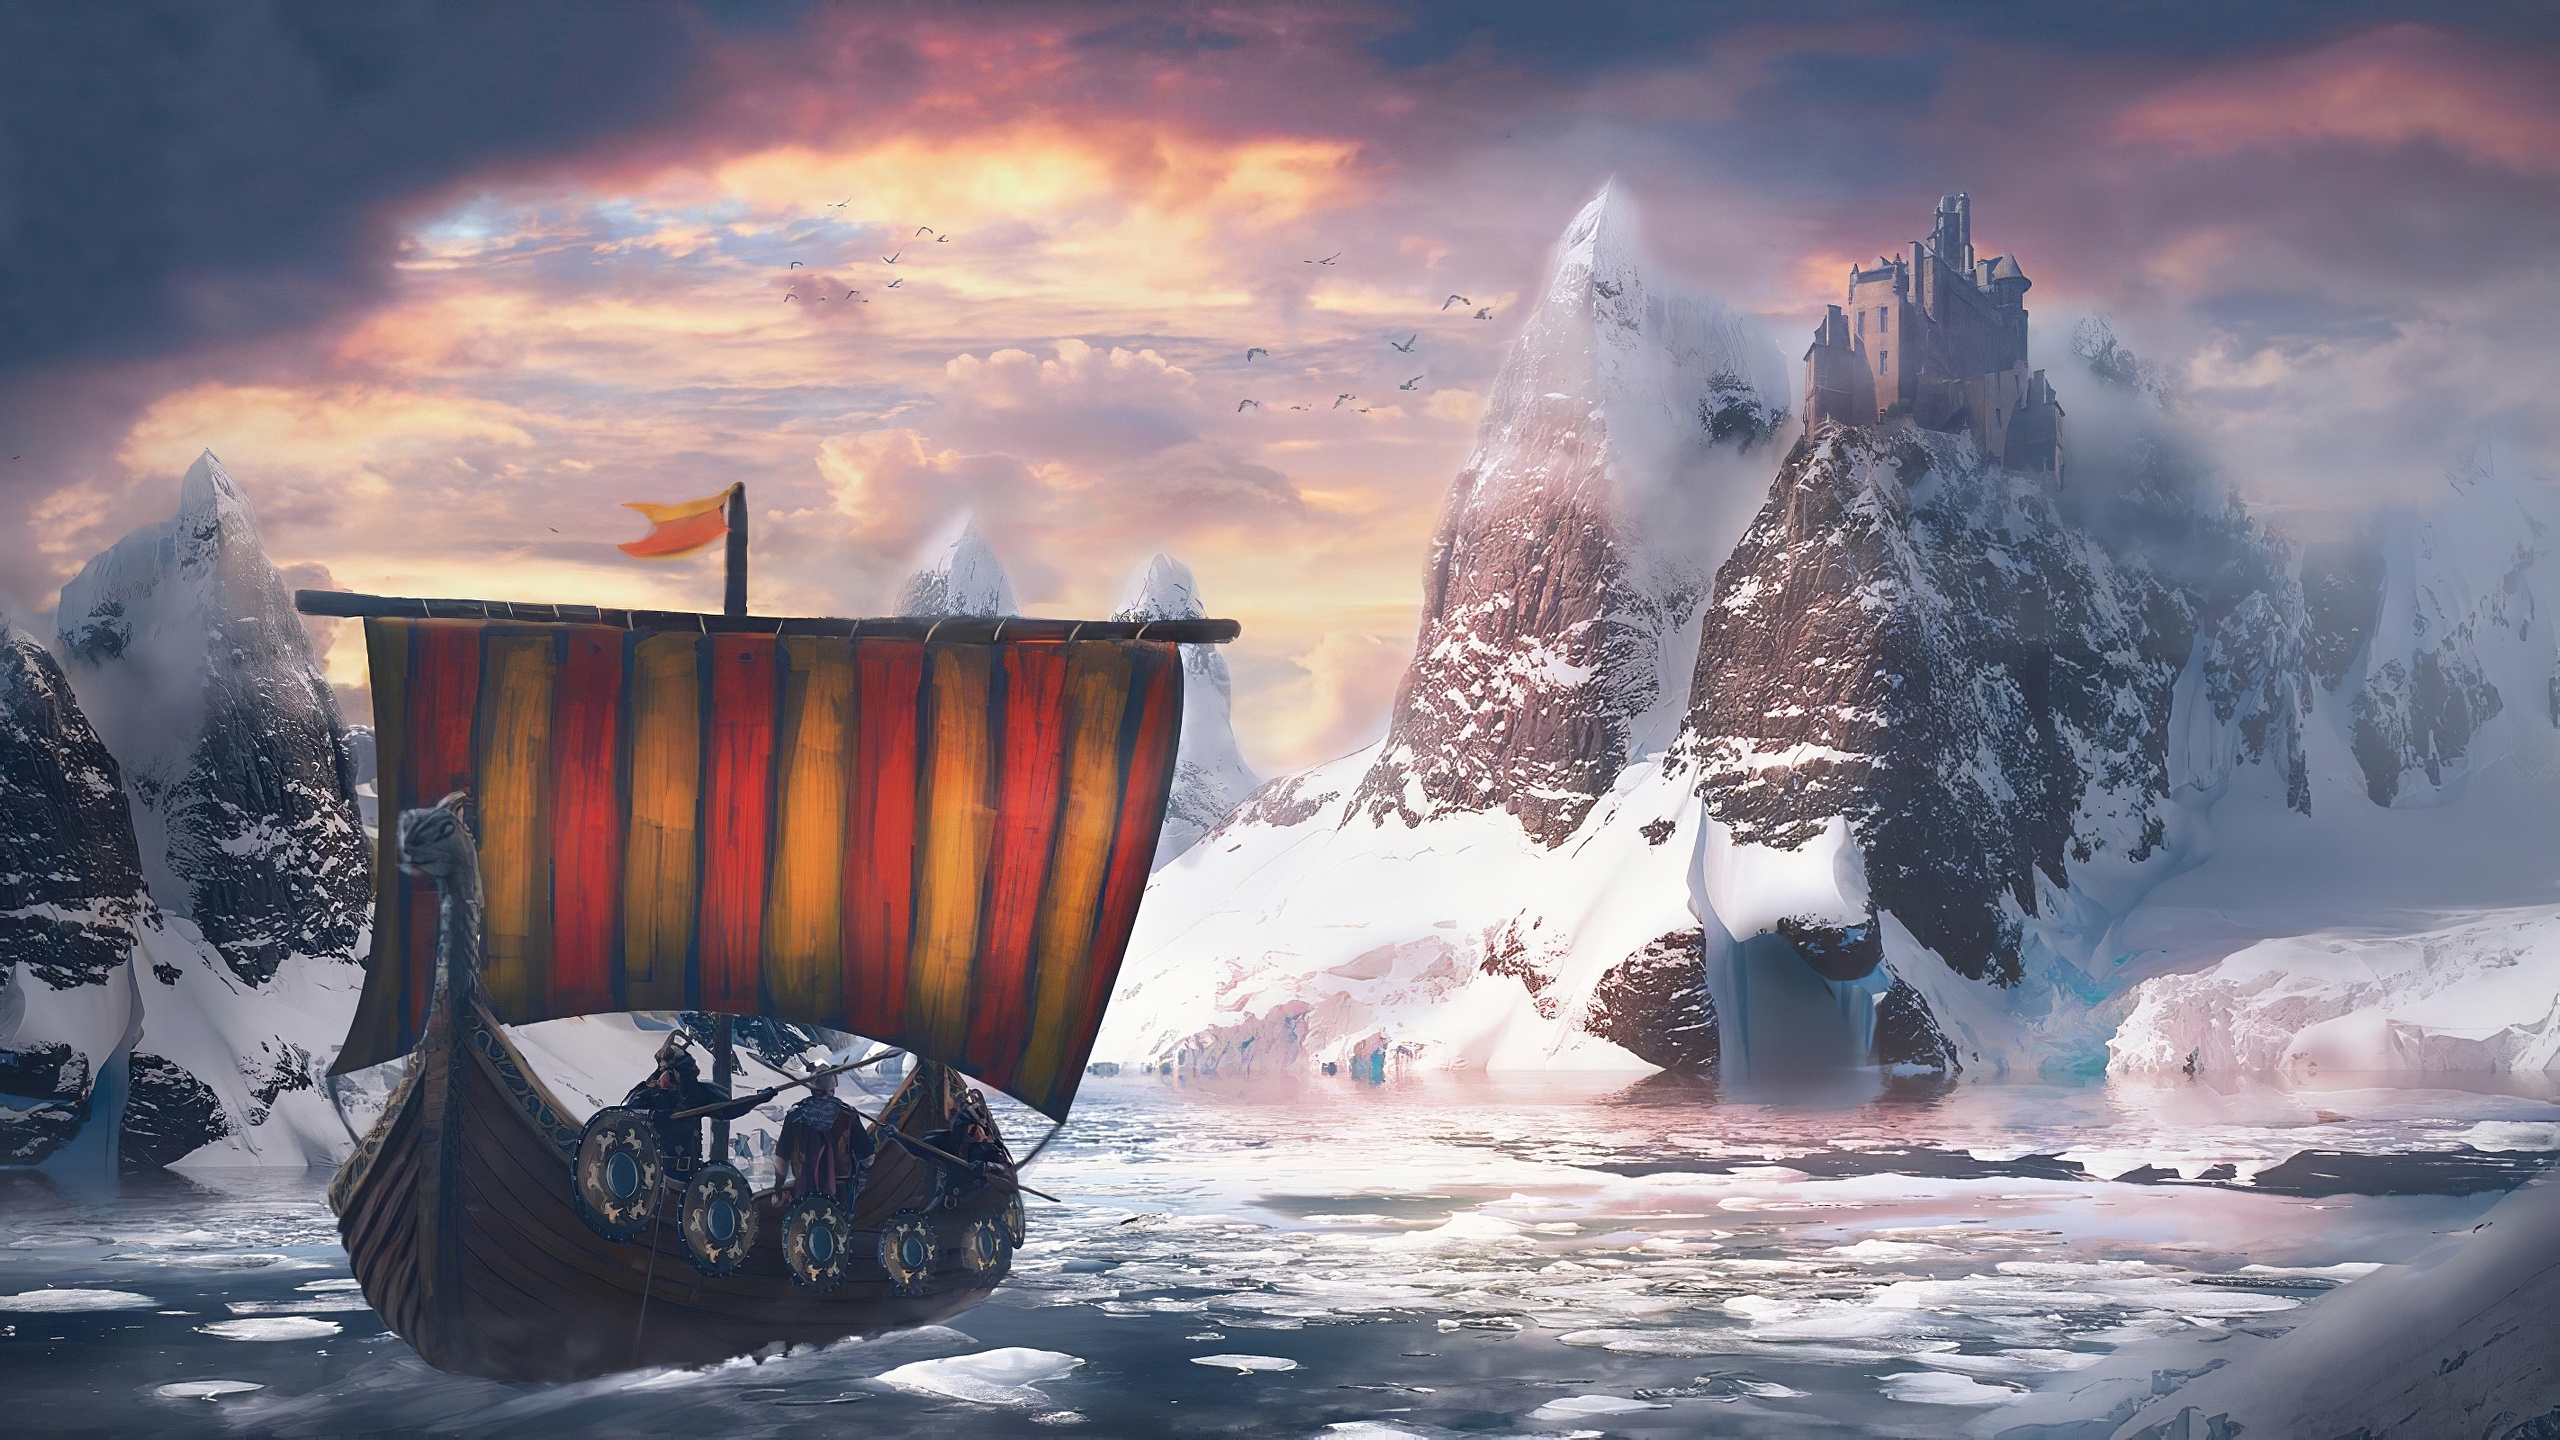 Wallpaper Winter, Artwork, Water, Clouds, Viking Ship, Mountain, Castle:2560x1440